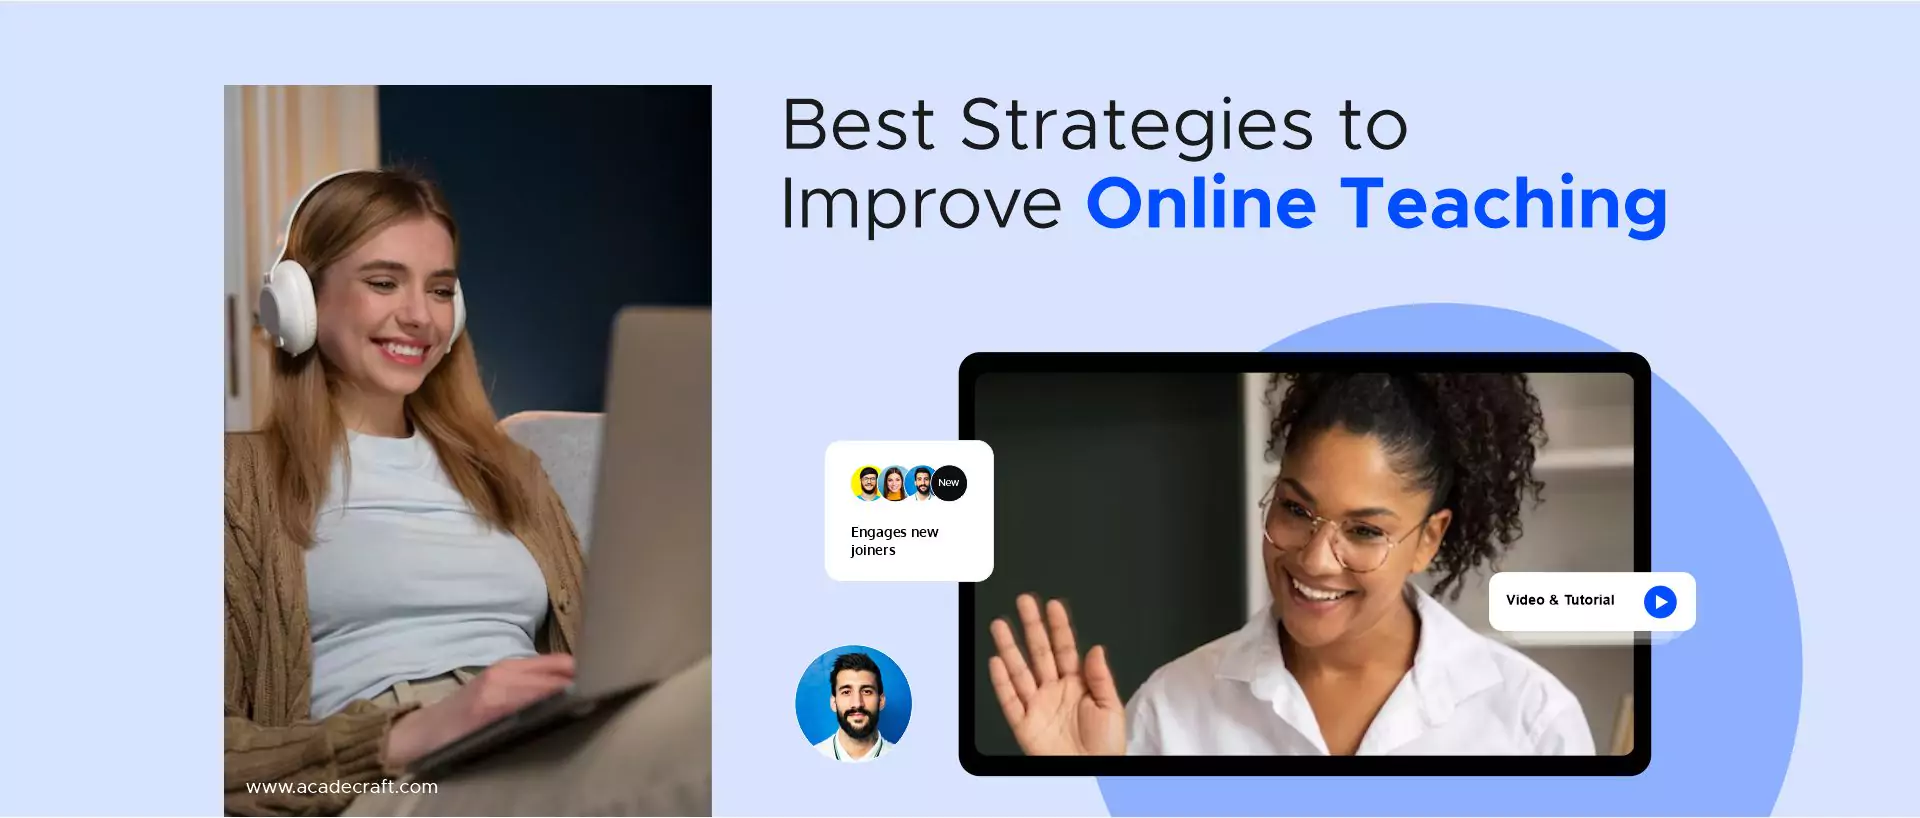 Best Strategies to Improve Online Teaching